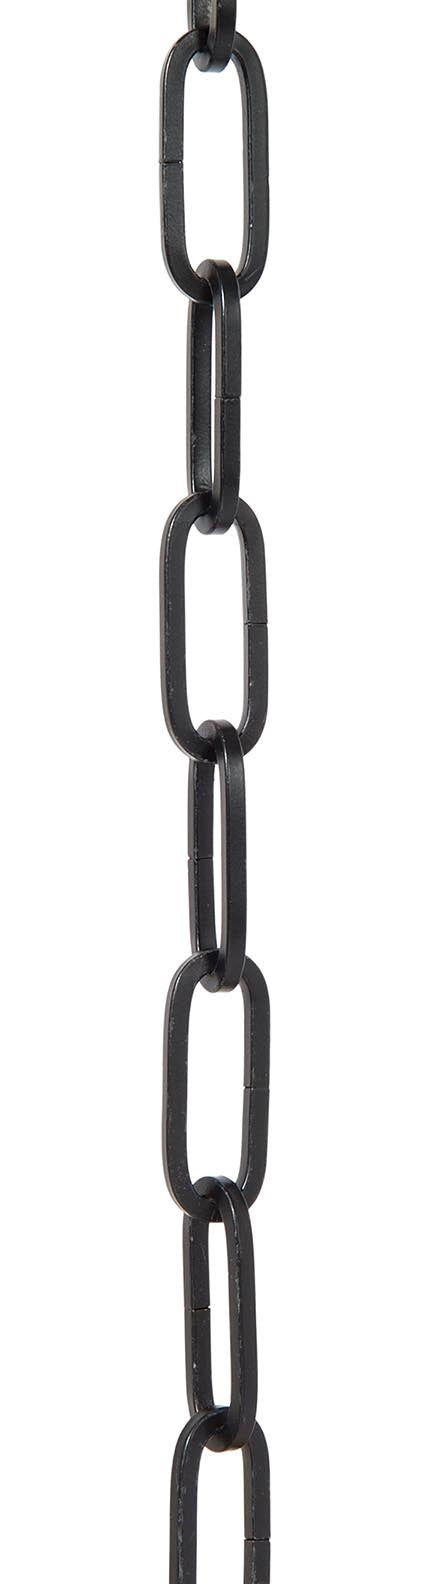 8 Gauge Satin Black Finish Steel Oval Chain